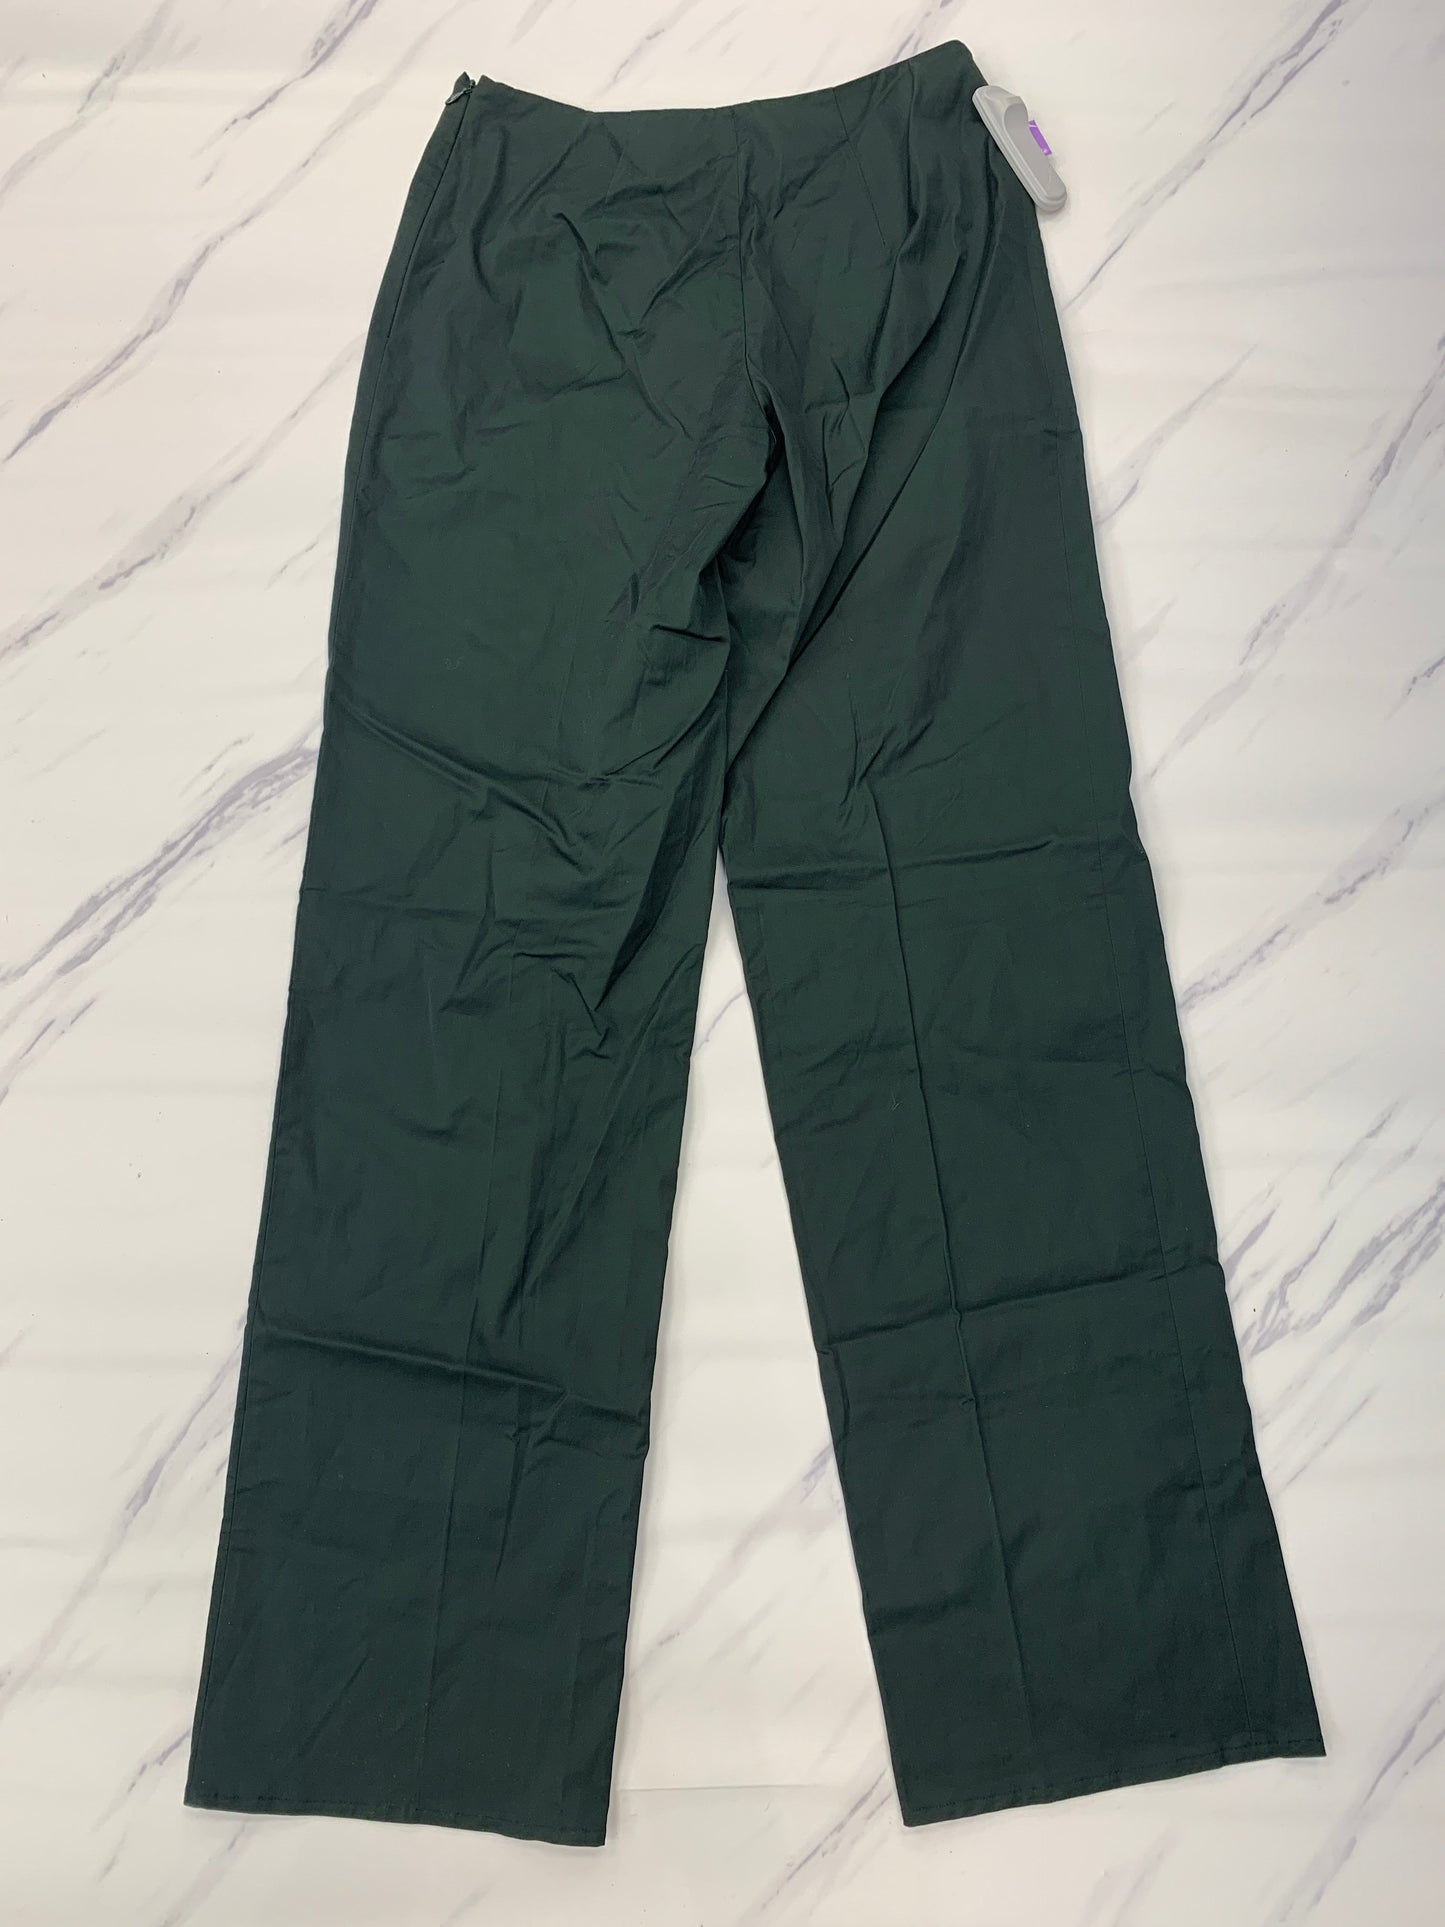 Green Pants Dress Cma, Size M